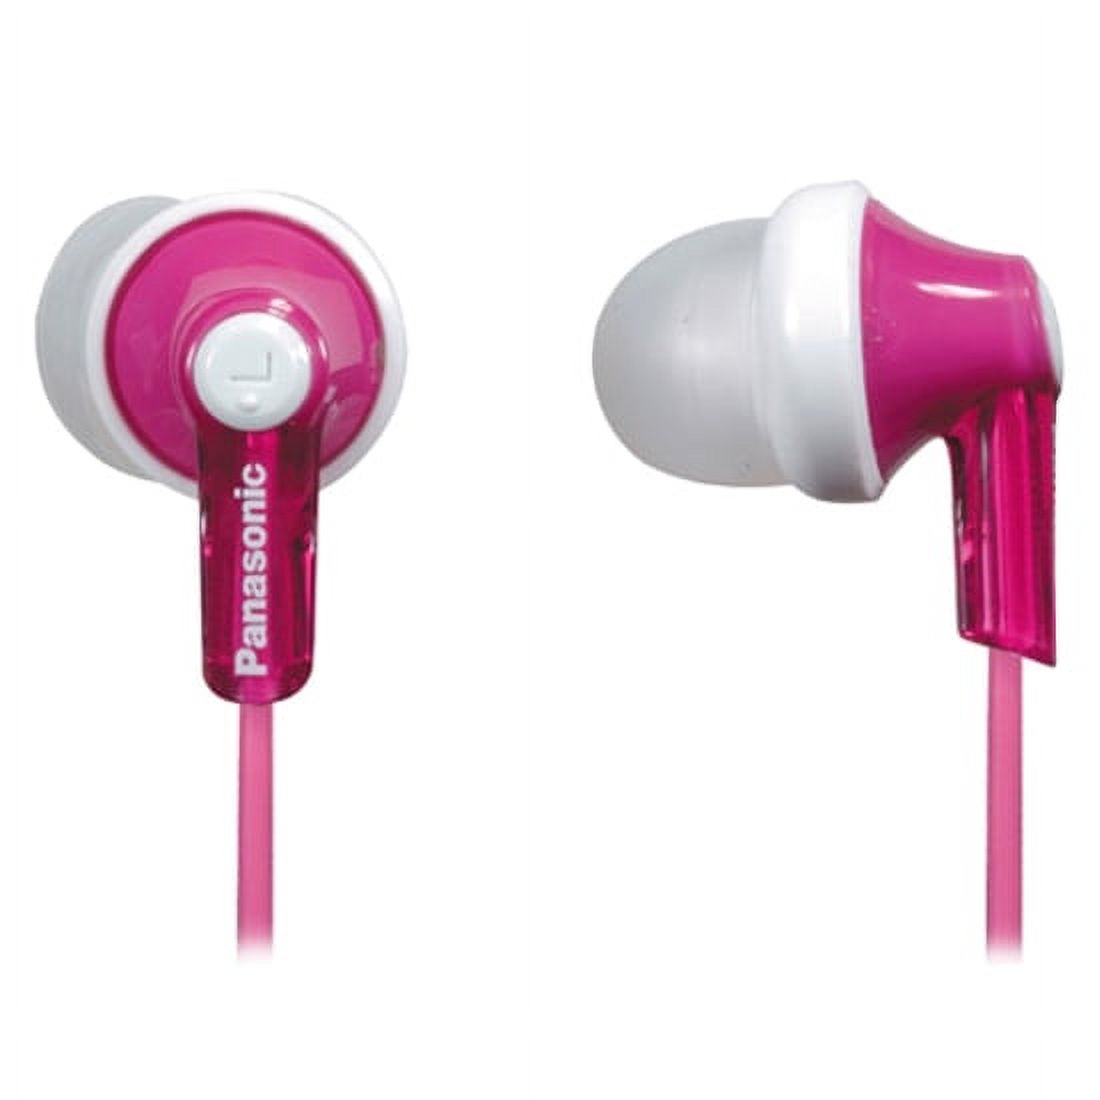 Panasonic Earbuds Pink, RP-HJE120-P - image 1 of 2